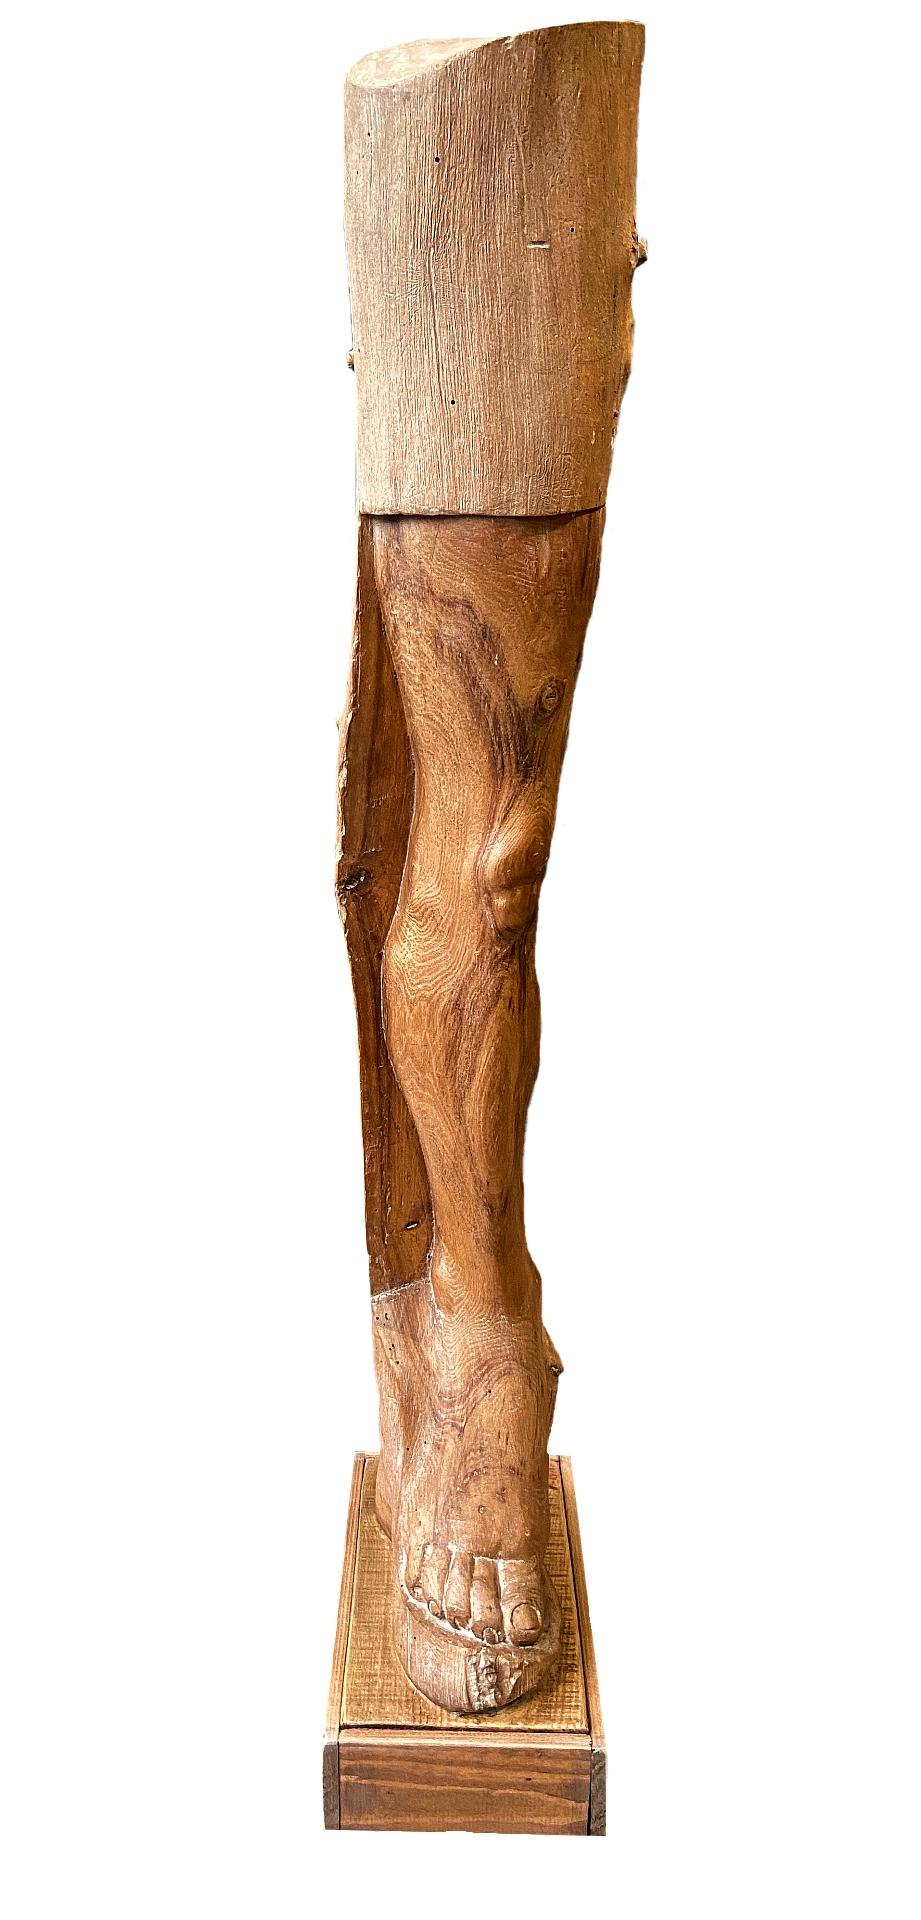 Lawson Rudge Figurative Sculpture - Wooden Maquette of a Leg, Hand Carved British Sculpture